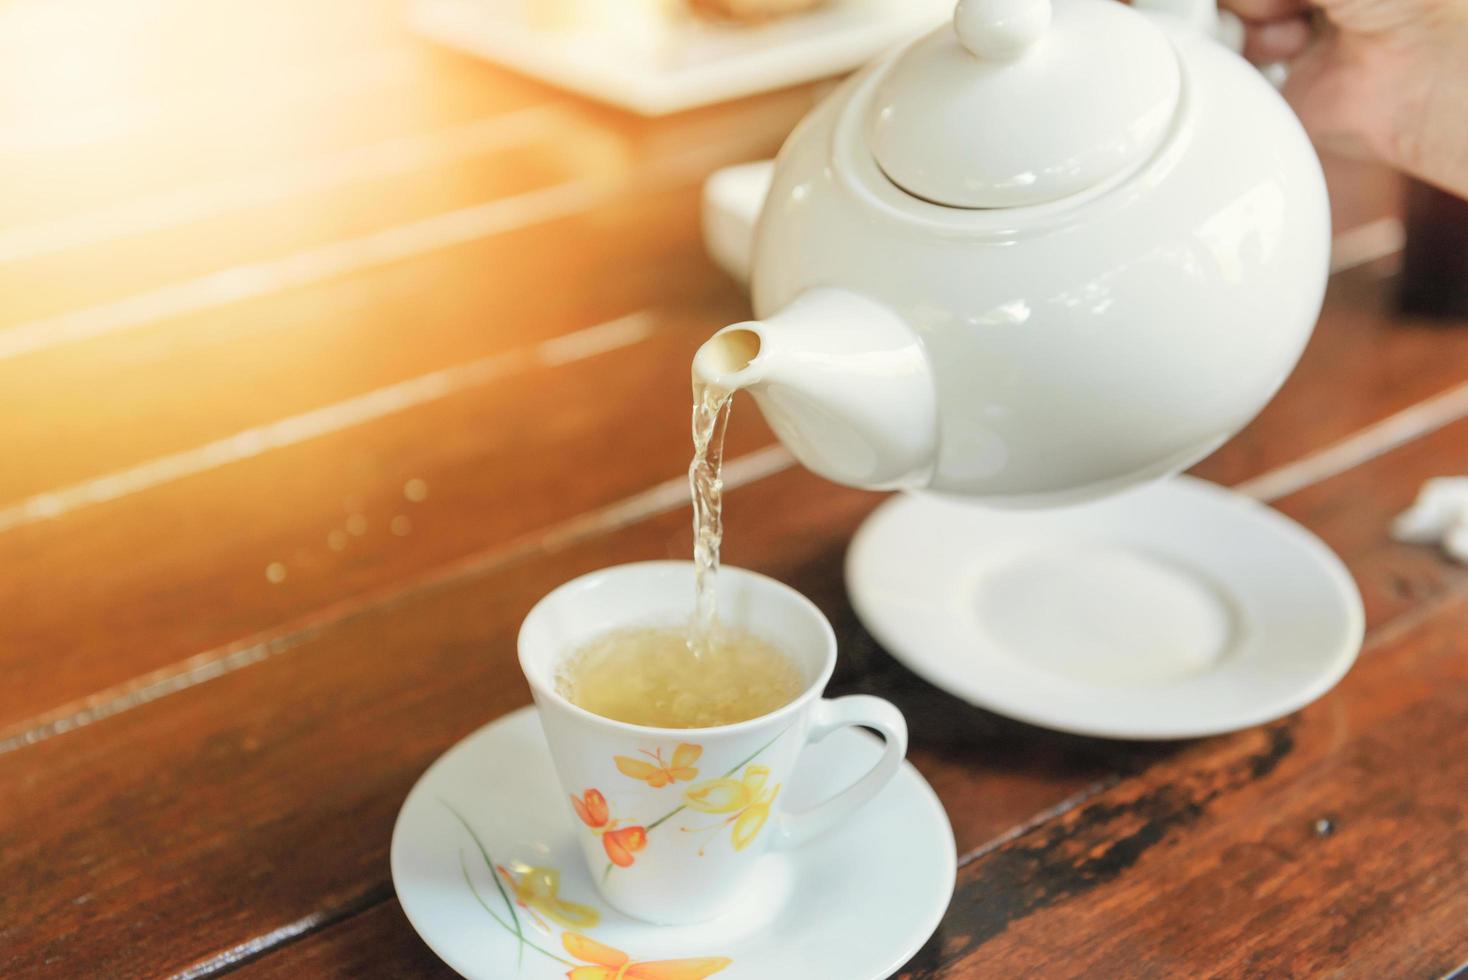 hora de la pausa del té. el té se vierte de la tetera en una taza. foto